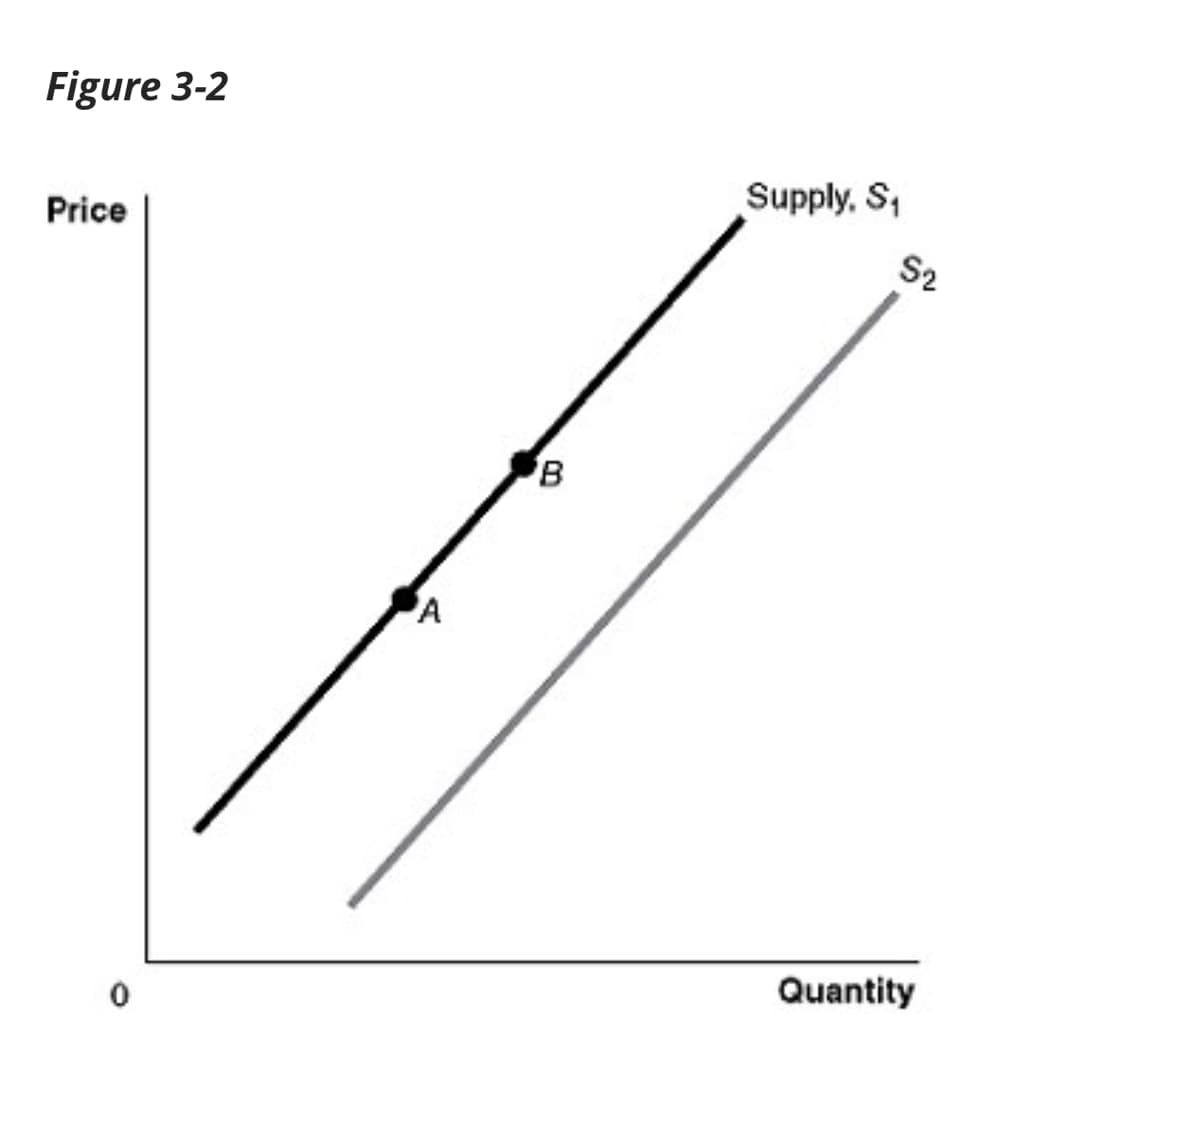 Figure 3-2
Price
0
A
B
Supply, S₁
S₂
Quantity